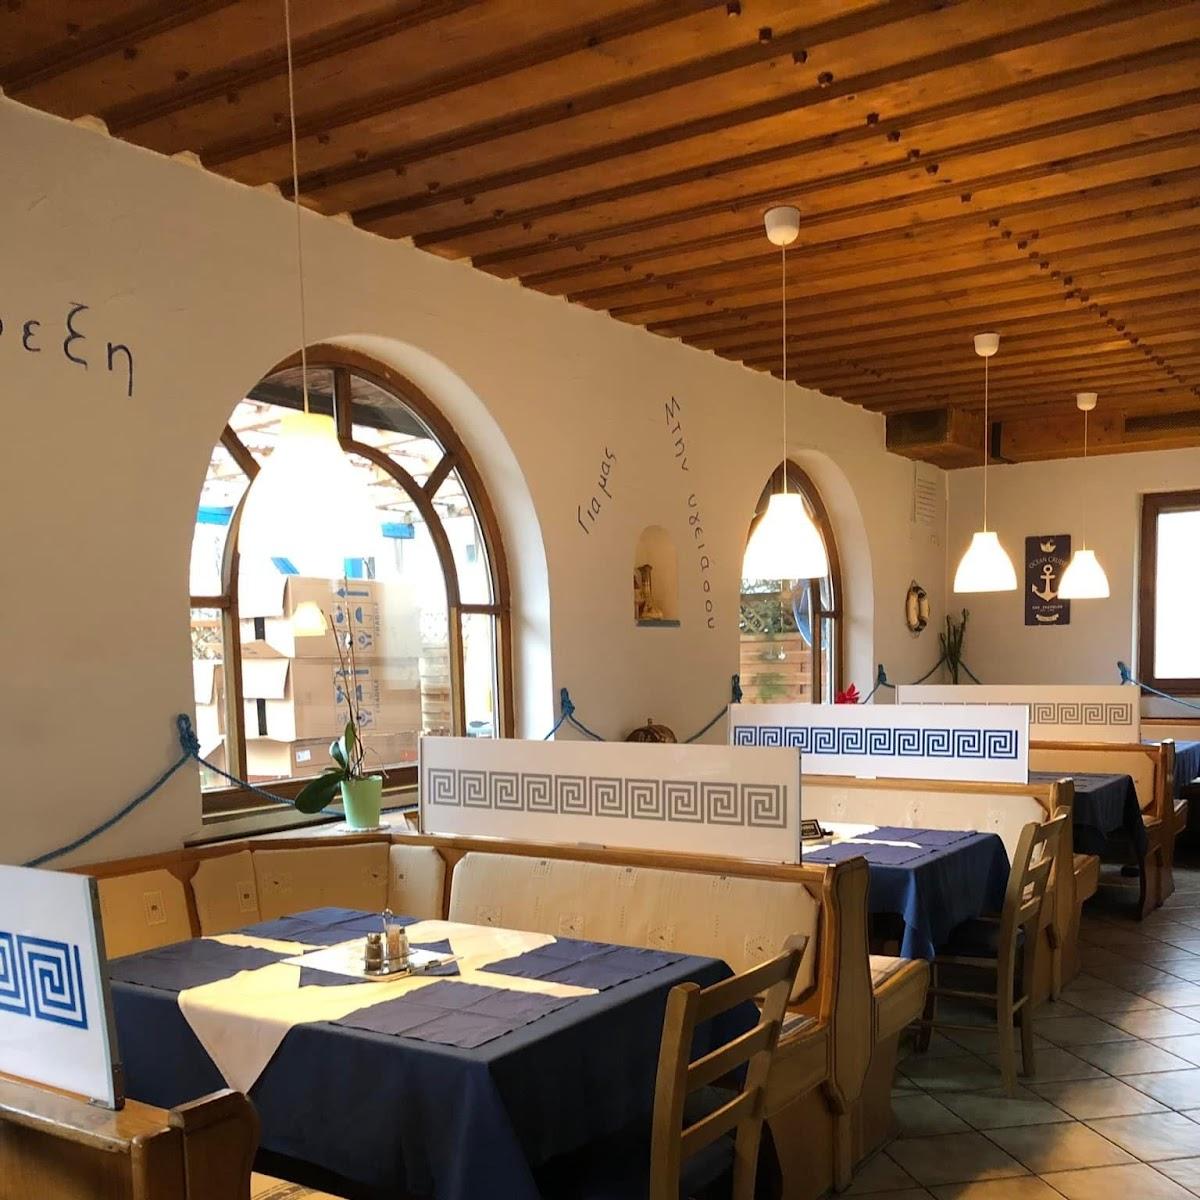 Restaurant "Griechische Taverna Petros" in Freilassing